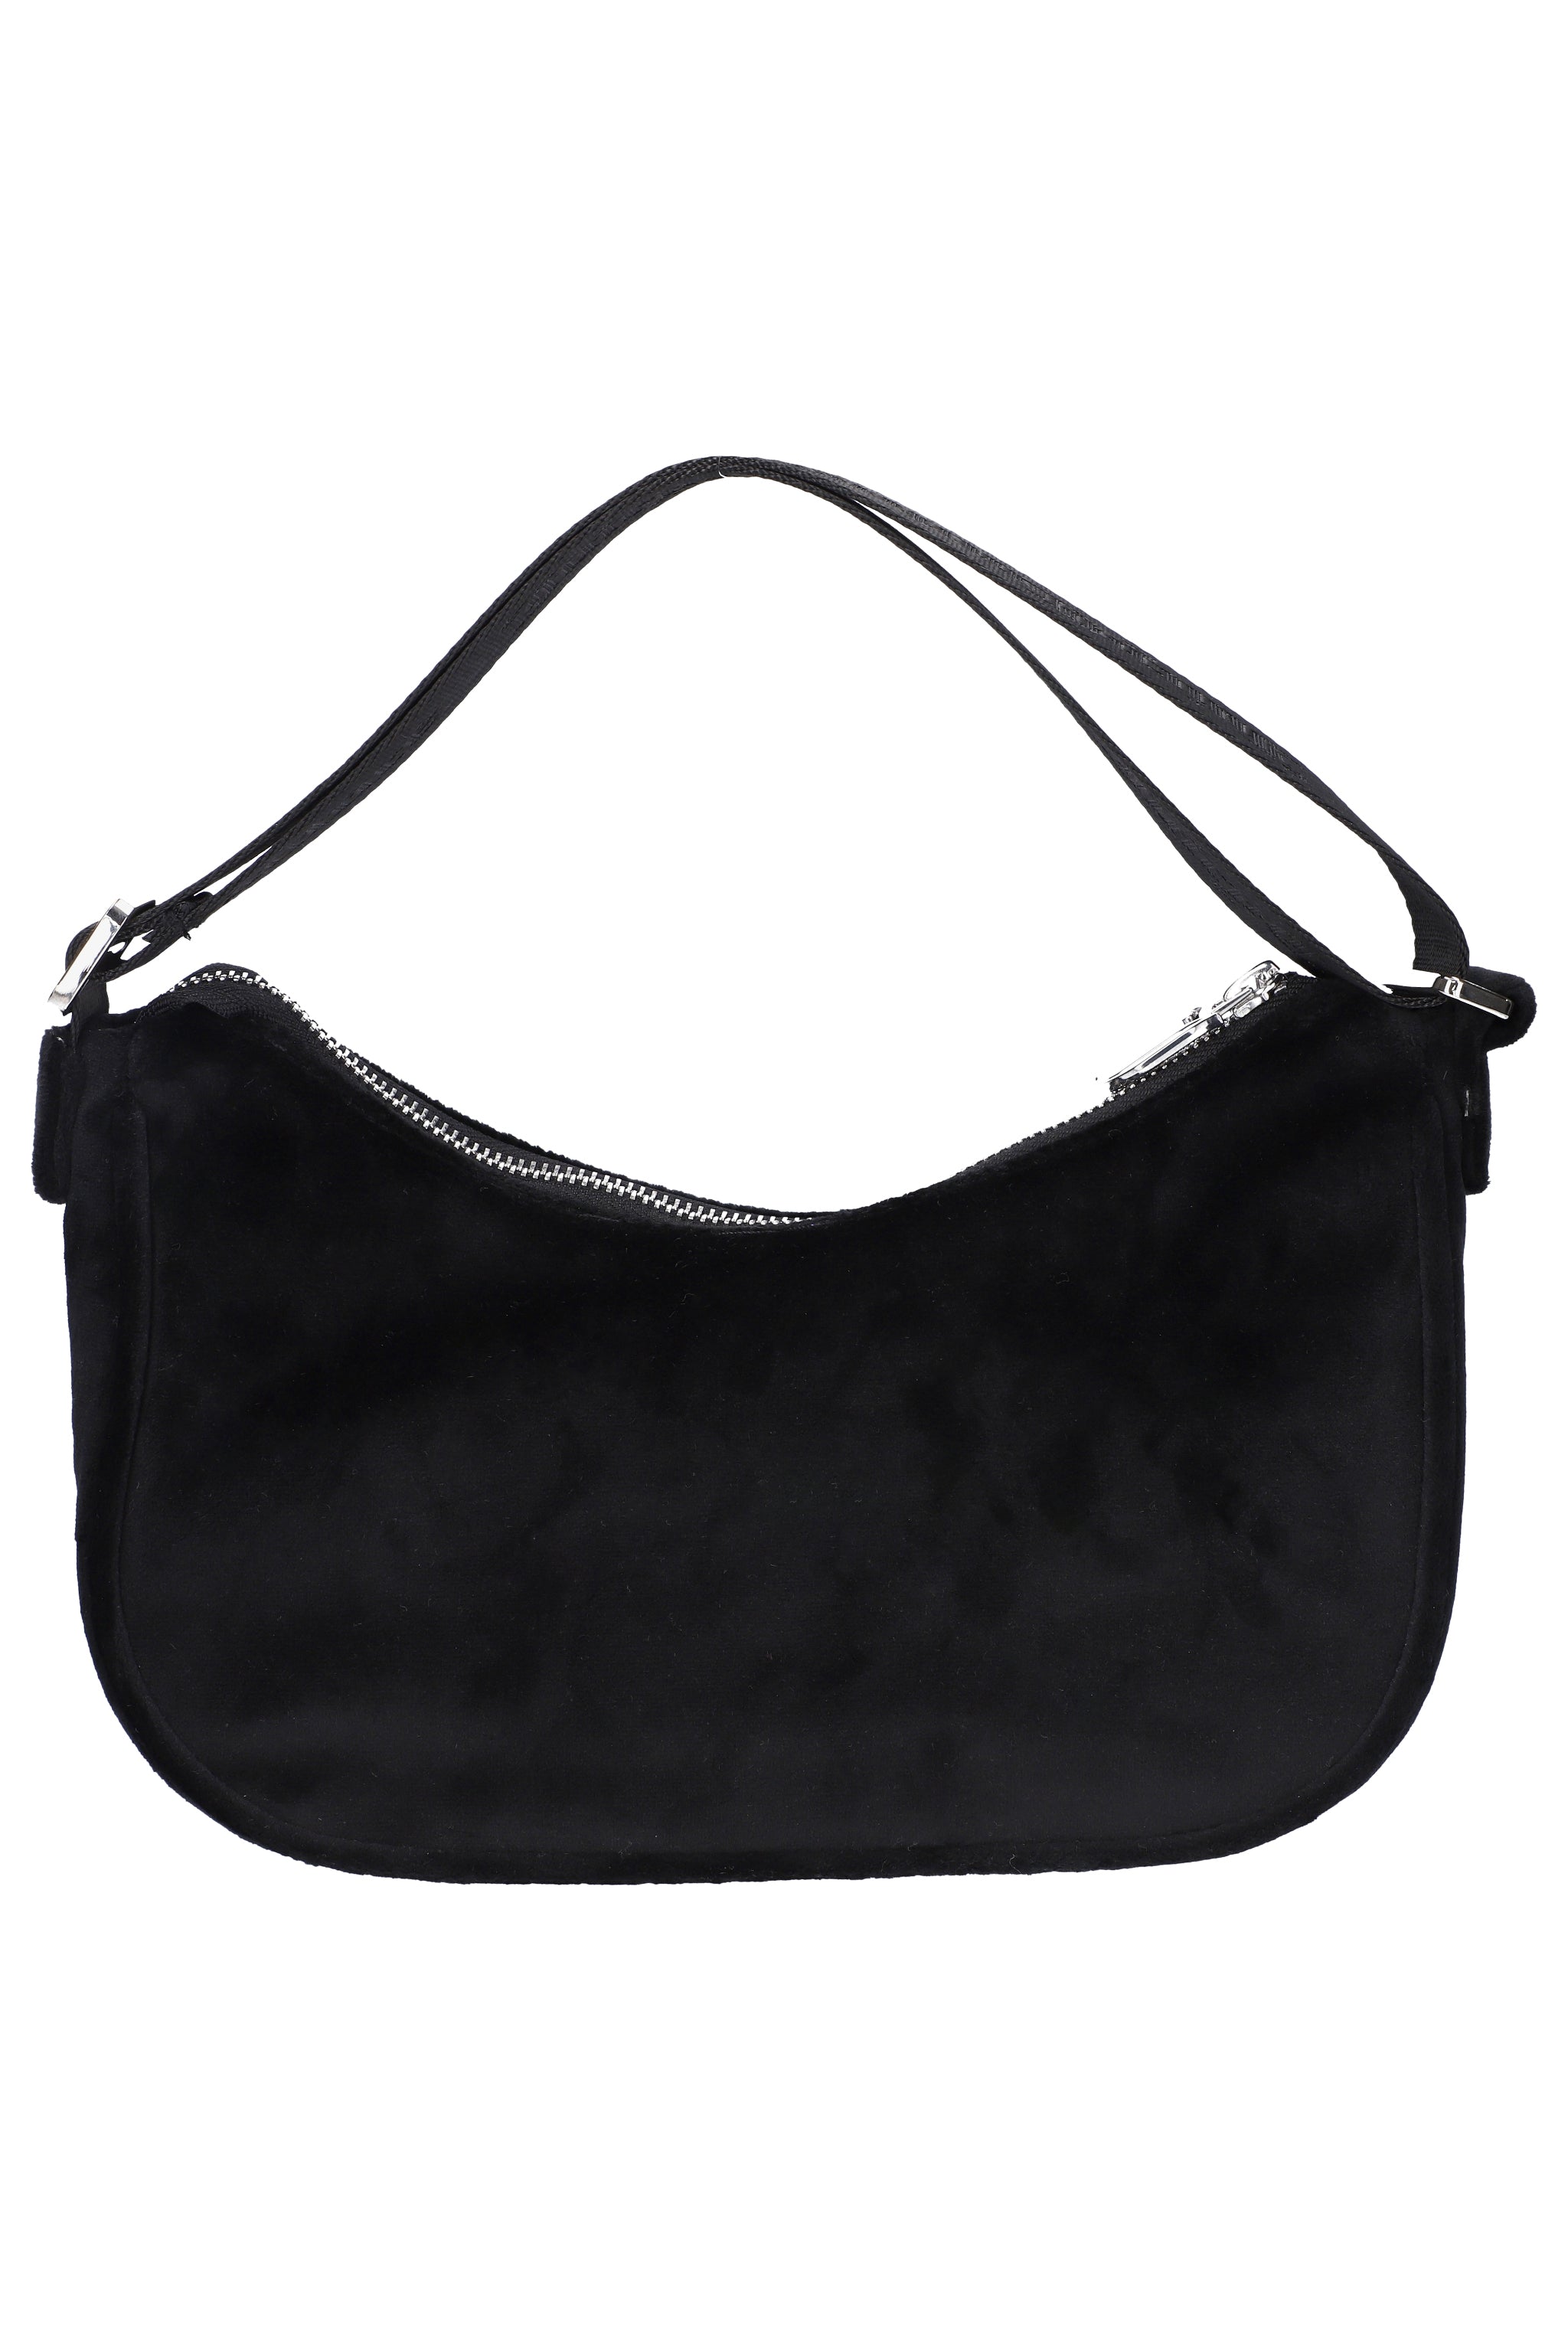 Juicy Couture Office Shoulder Bags | Mercari